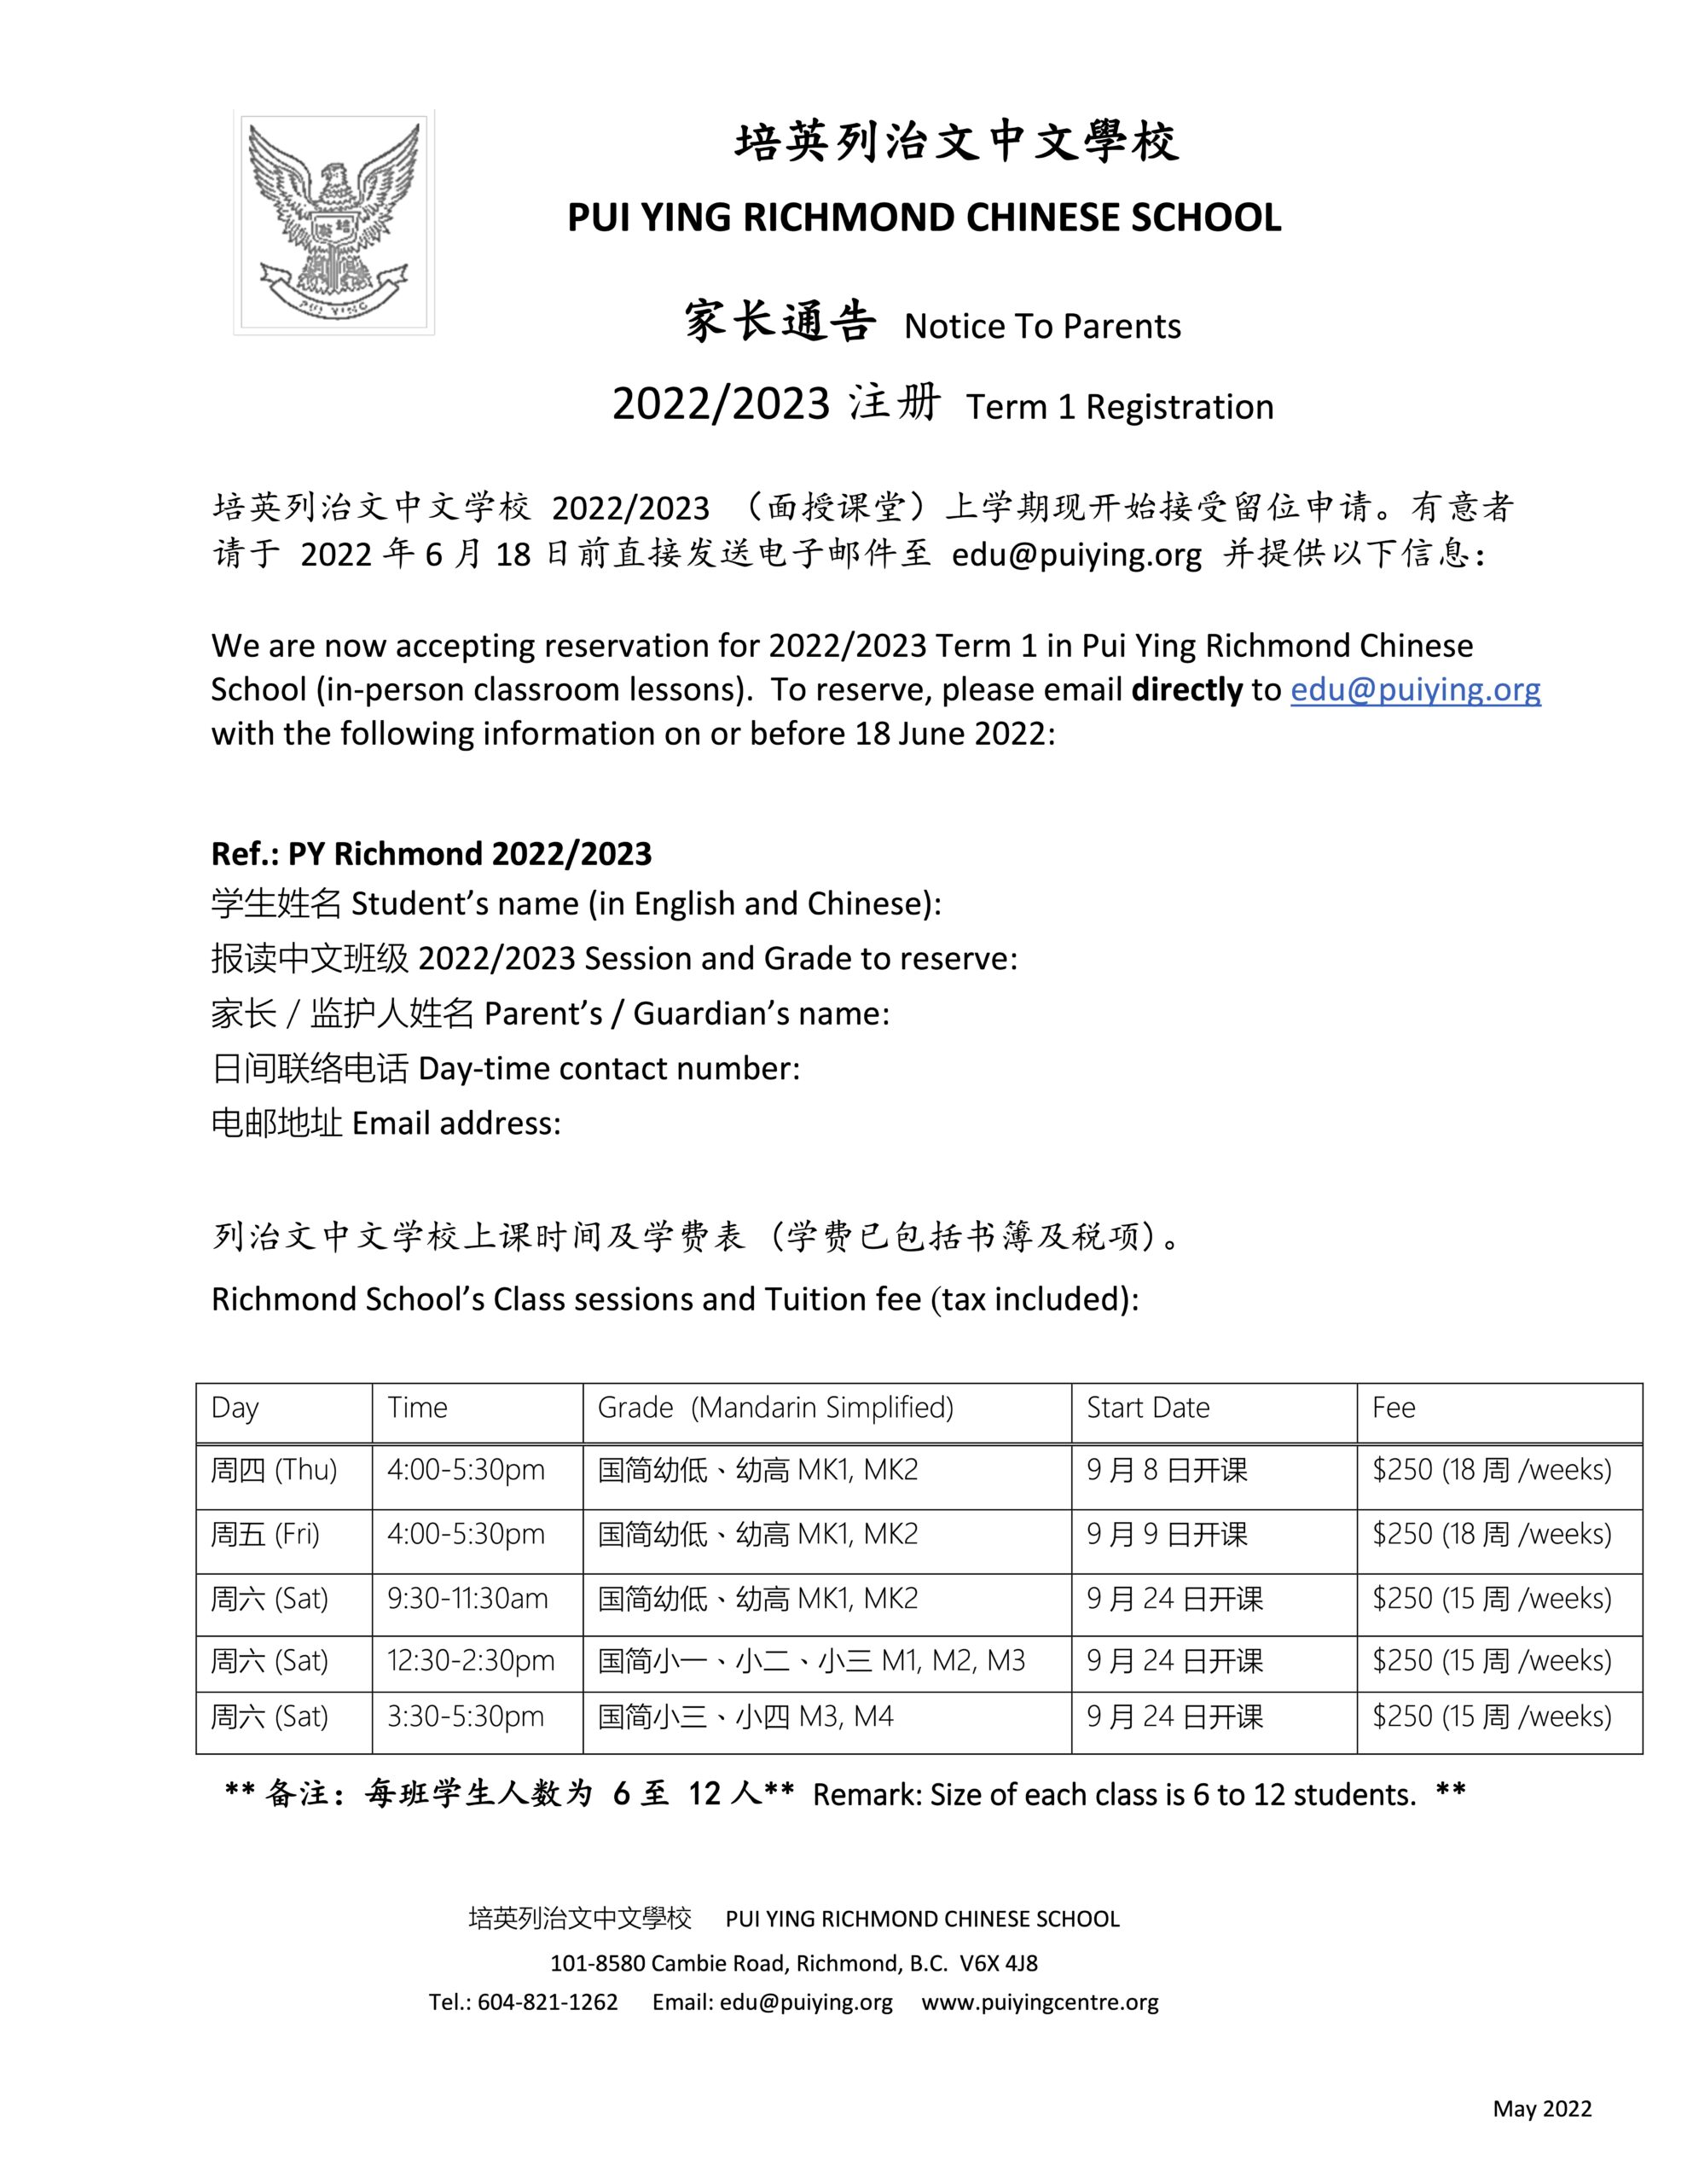 Richmond Chinese School Registration 1 (1)